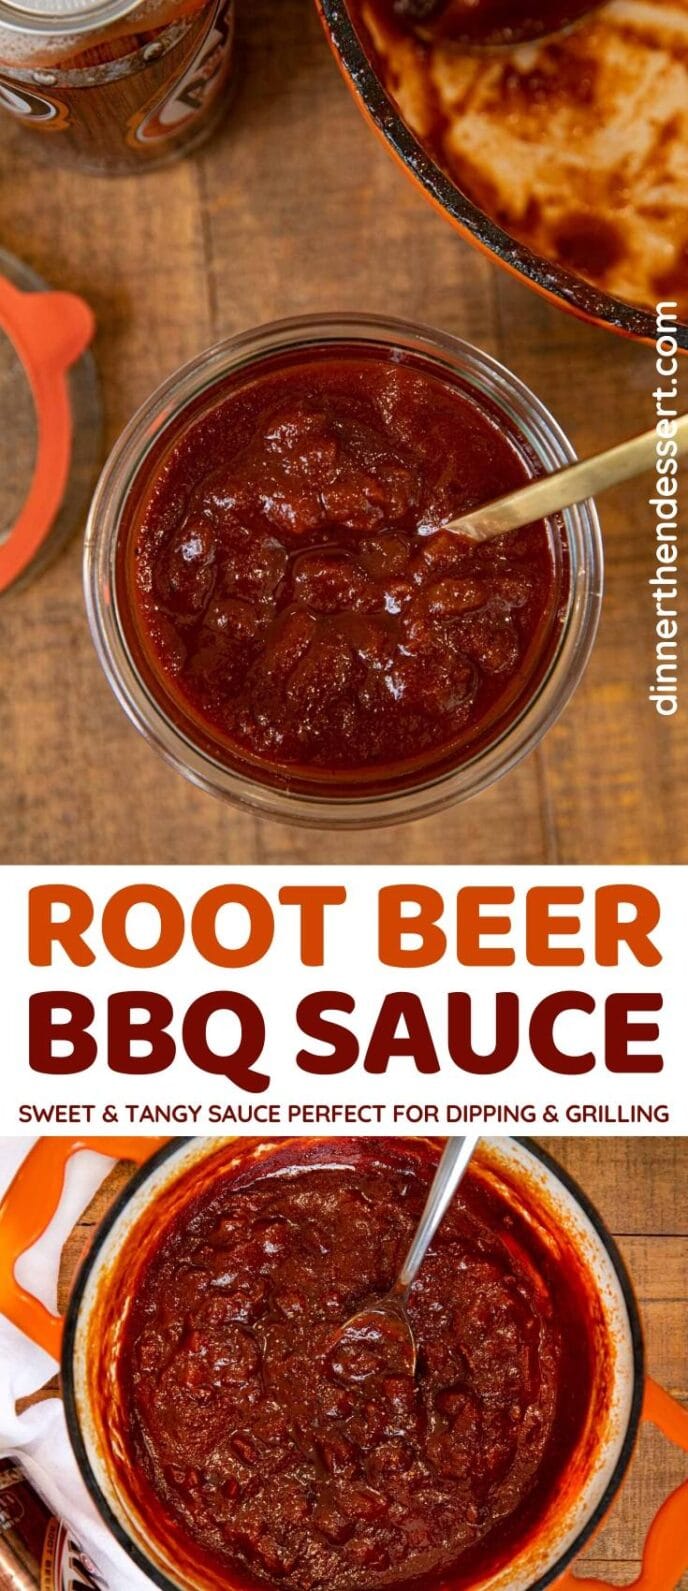 Root Beer BBQ Sauce collage